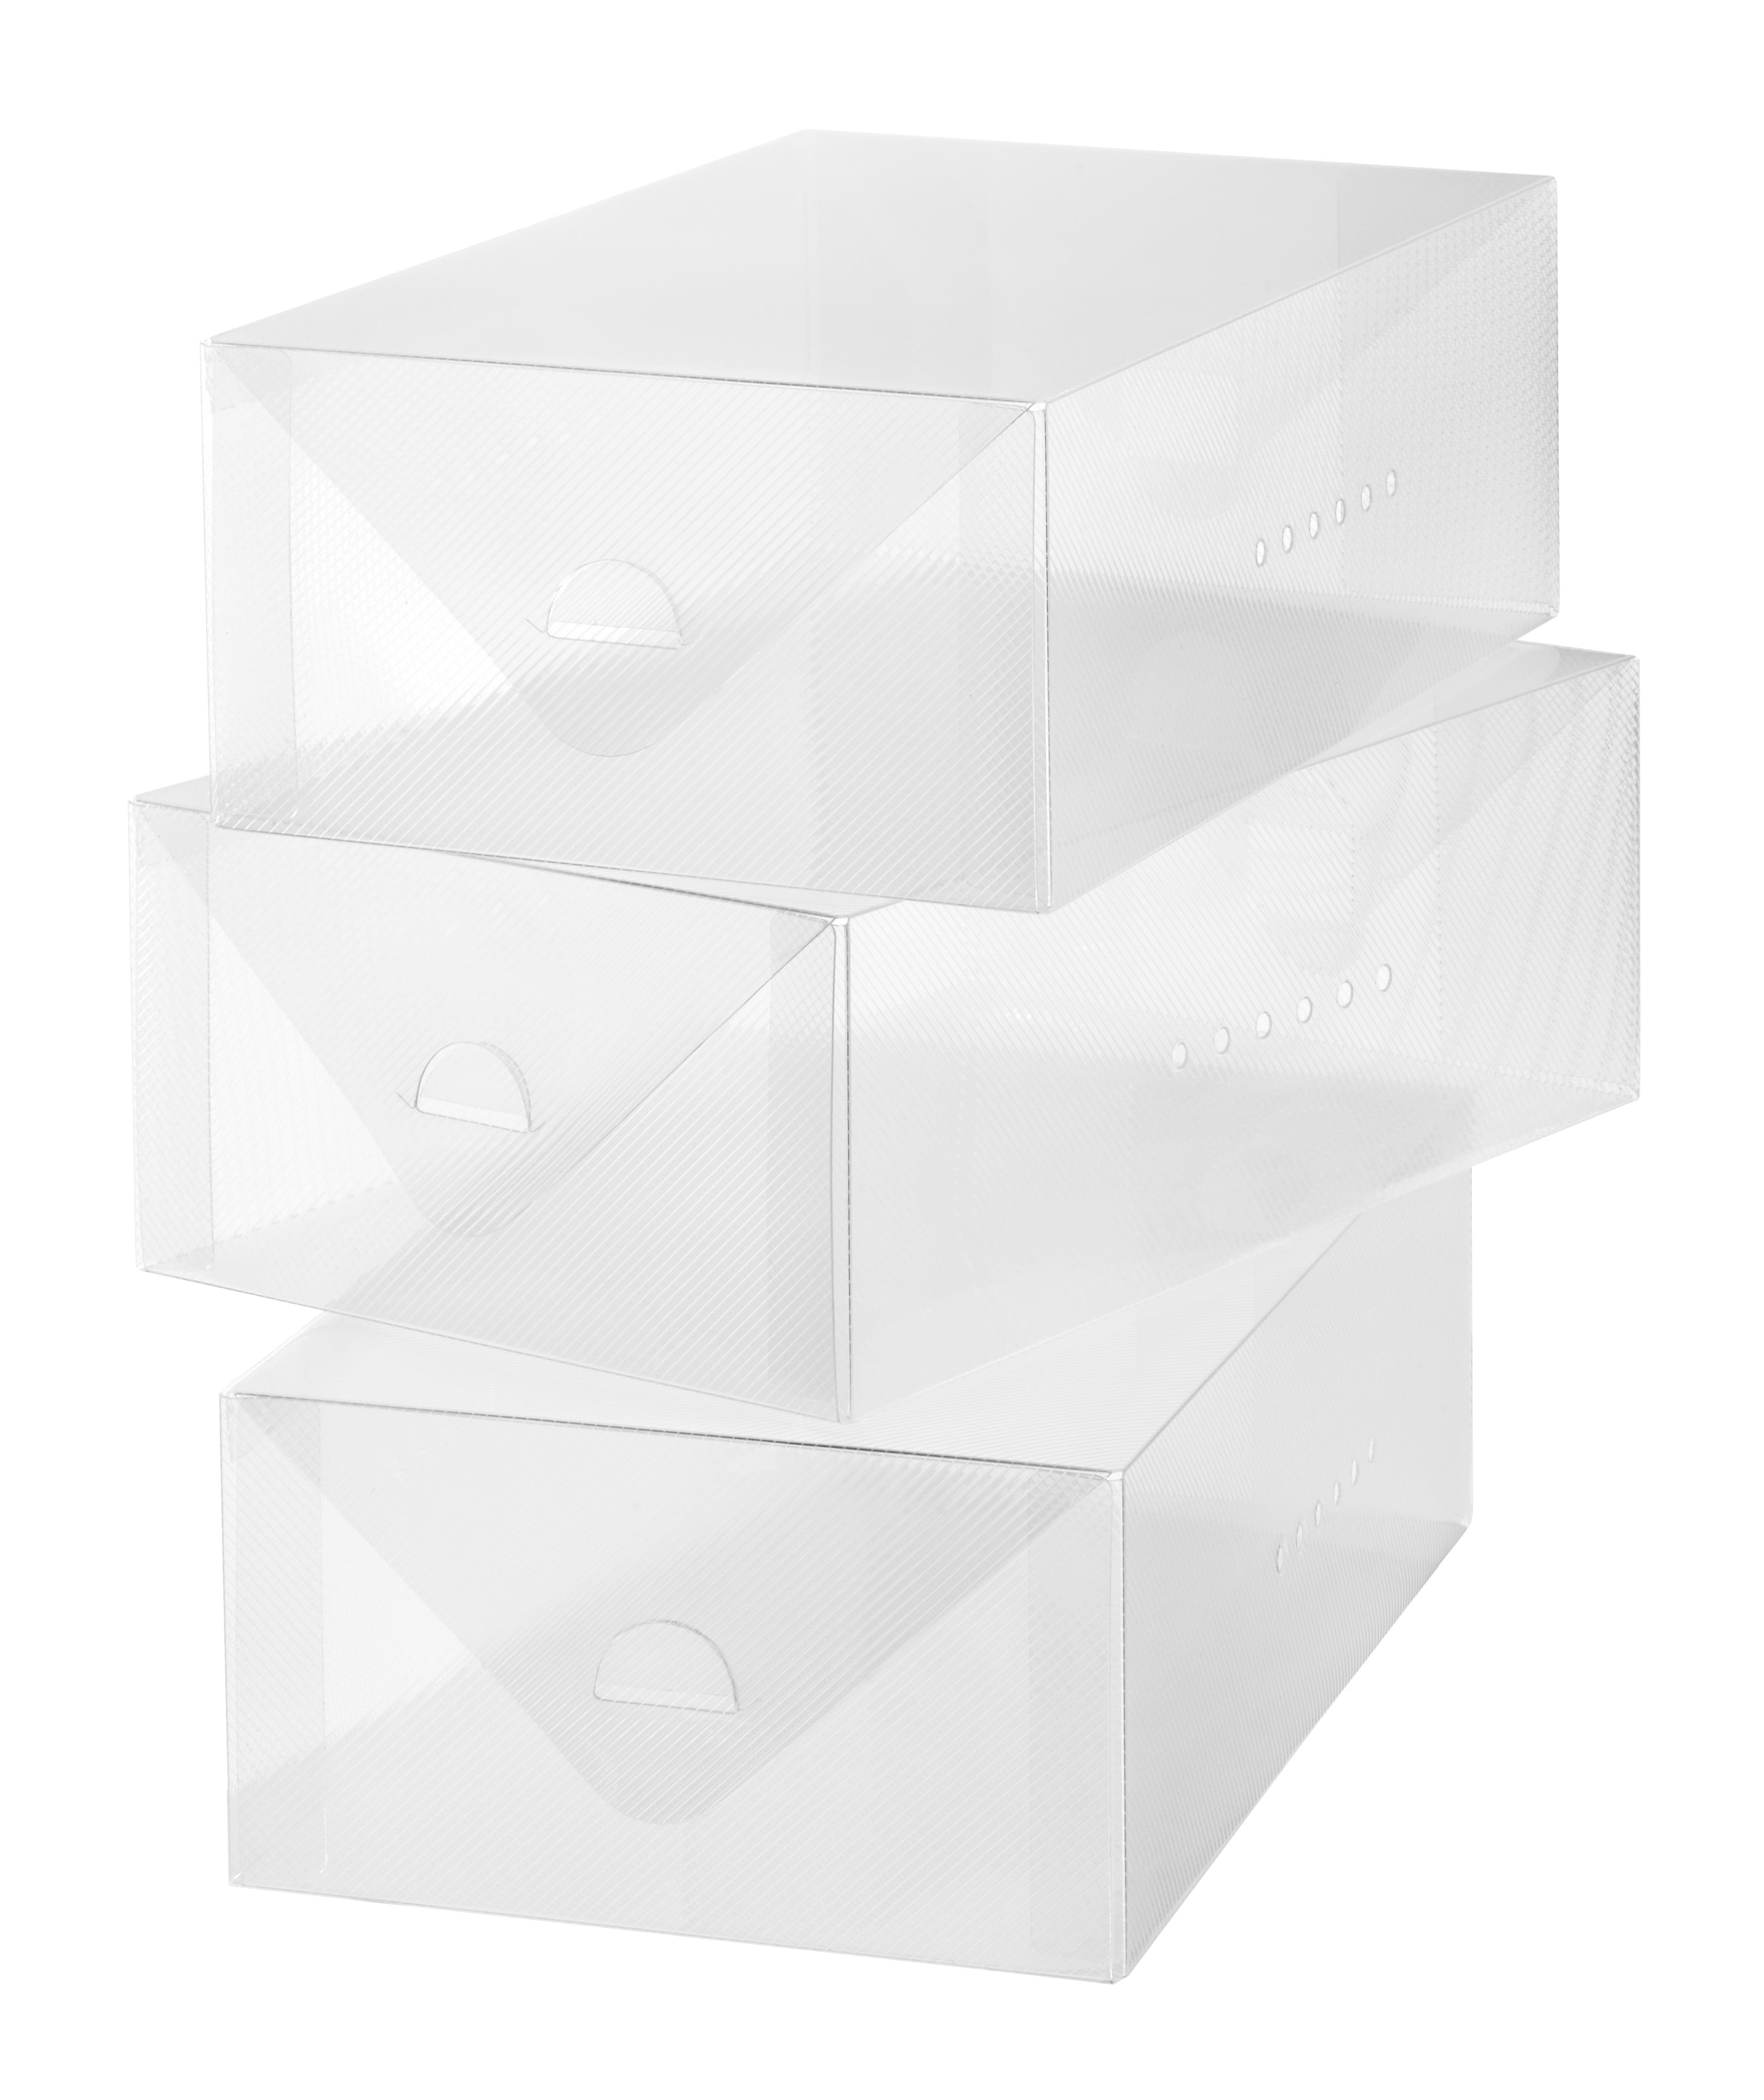 Whitmor Clear Vue Men's Shoe Box - Set of 3 - Clear PVC